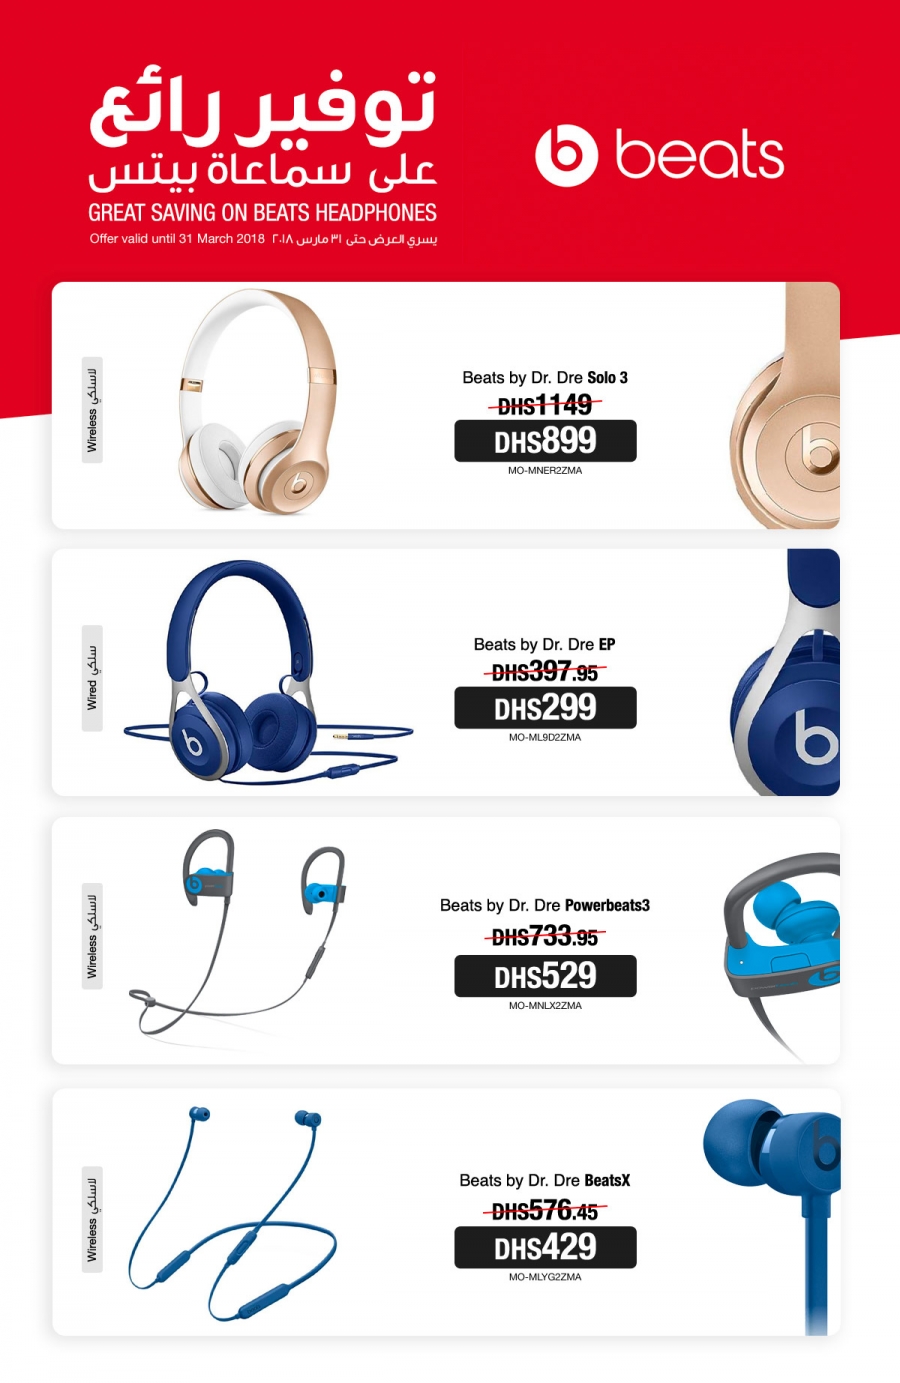 Great Savings on Beat Headphones